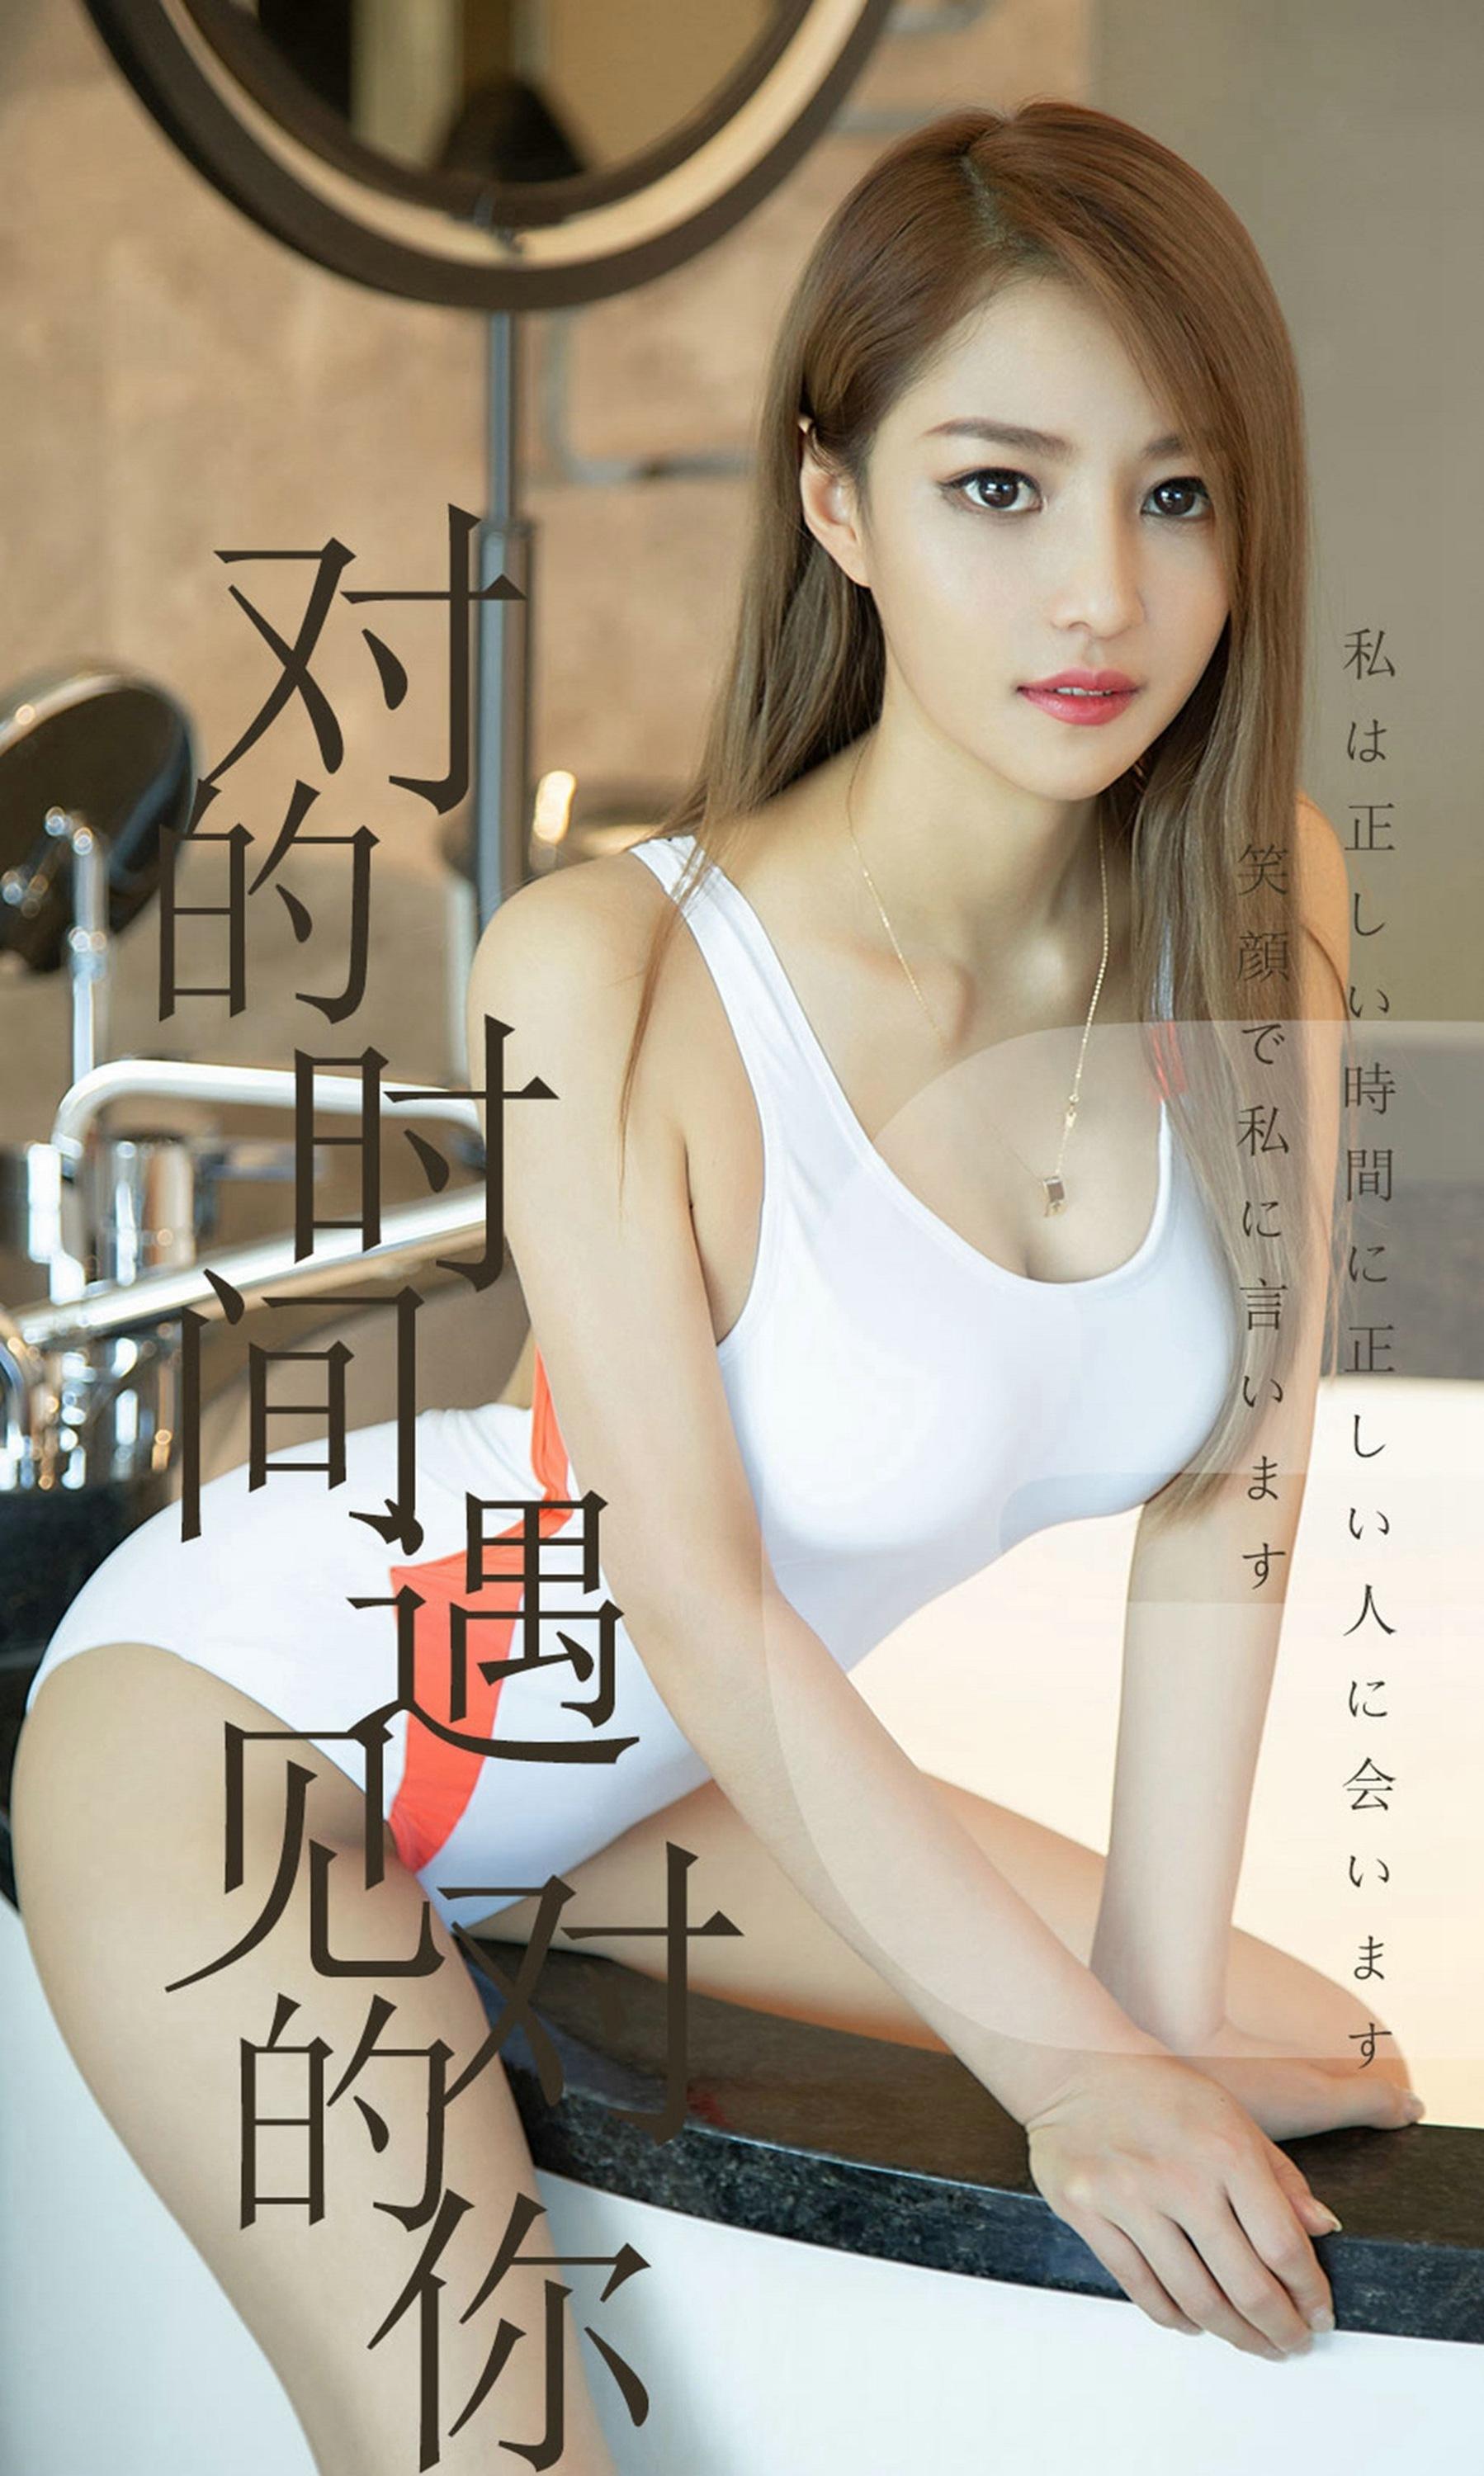 Ugirls爱尤物 2019刊 No.1490 陈佳佳 - 1.jpg